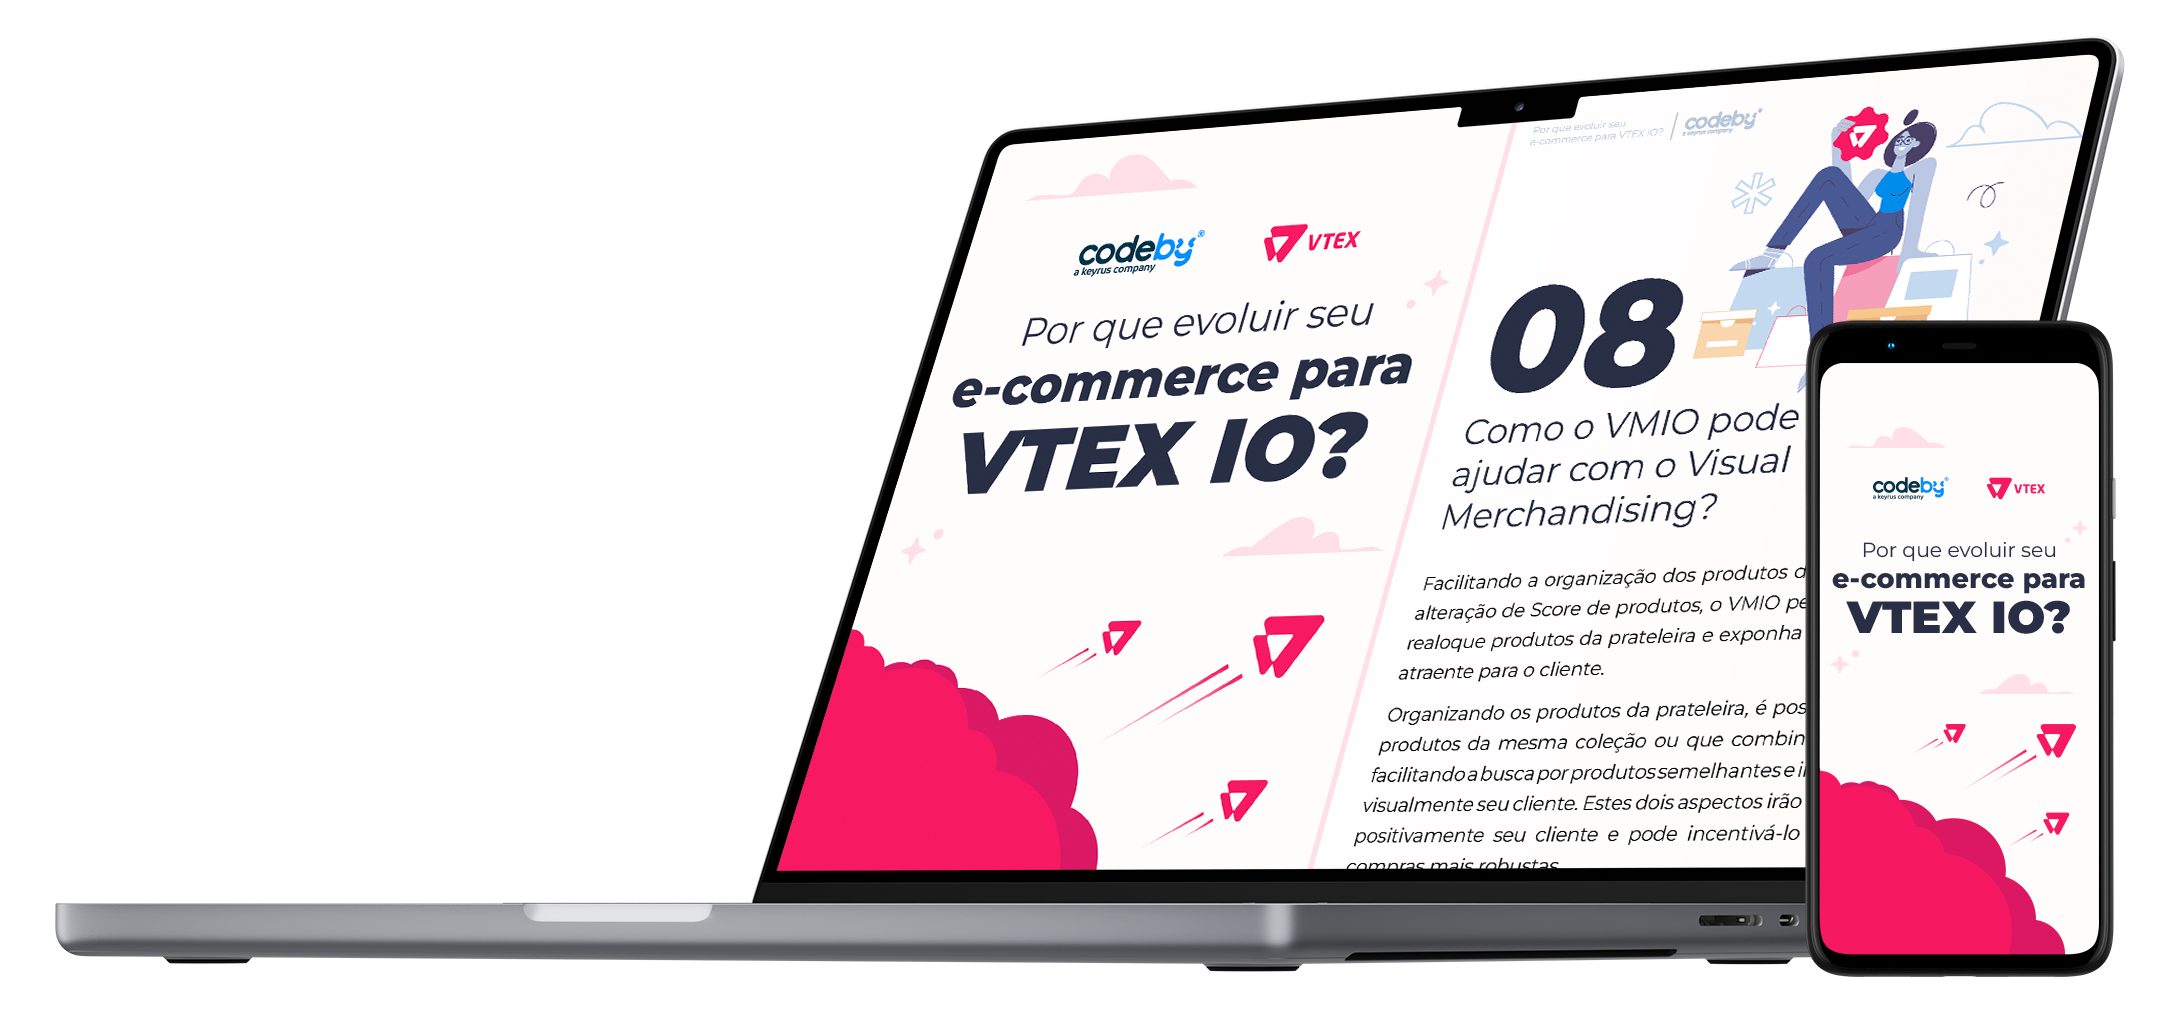 LP - Banners Ebook - Por que evoluir seu e-commerce para VTEX IO-1